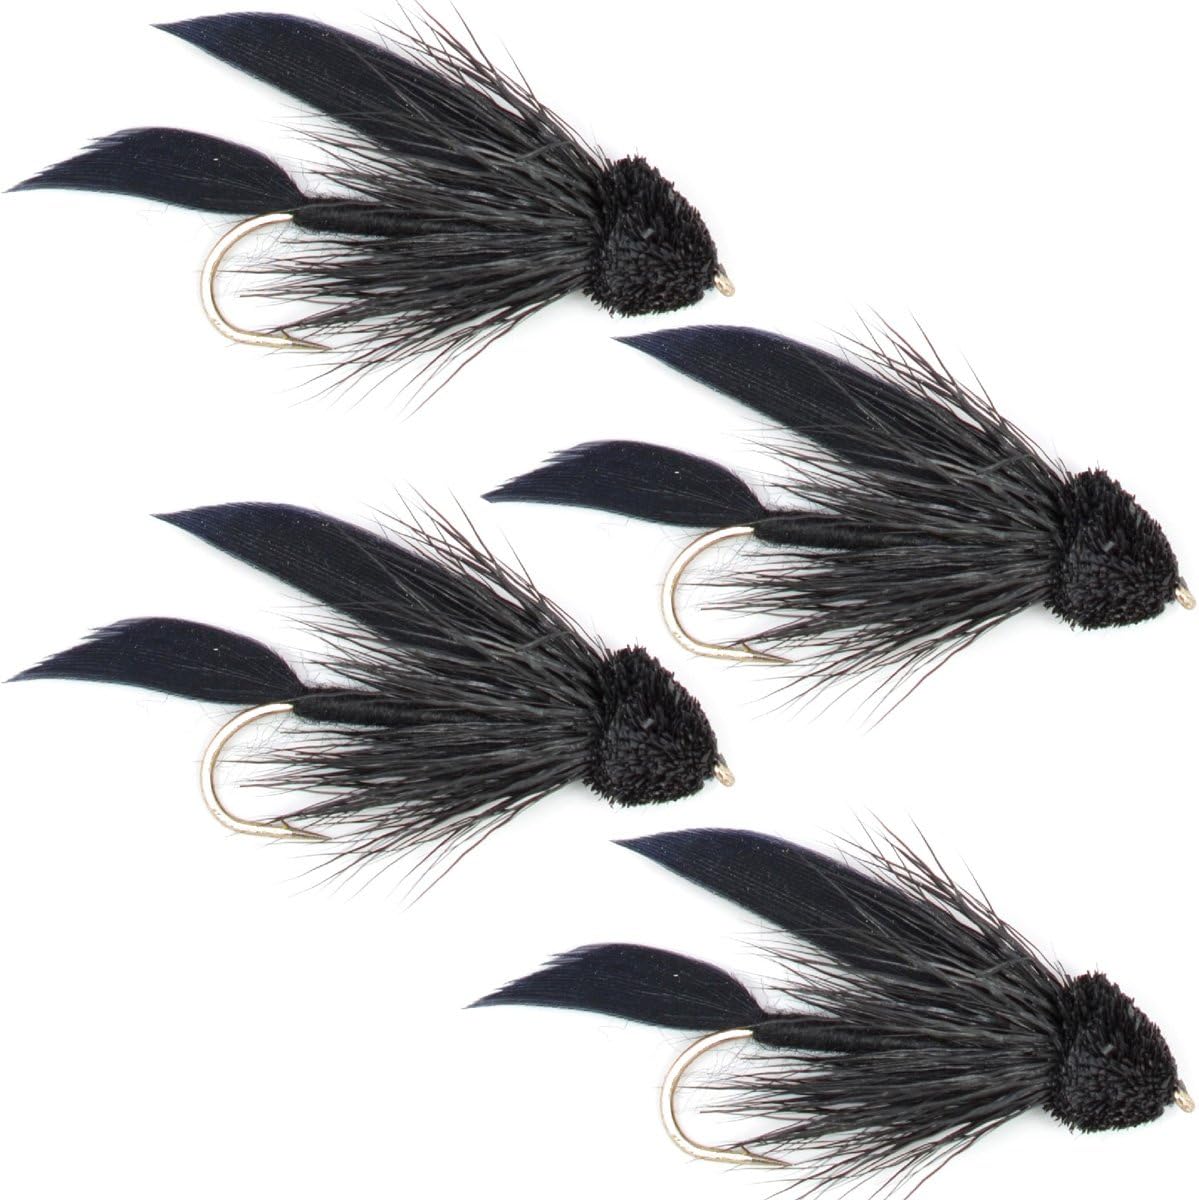 Black Muddler Minnow Fly Fishing Flies - Classic Streamers - Set of 4